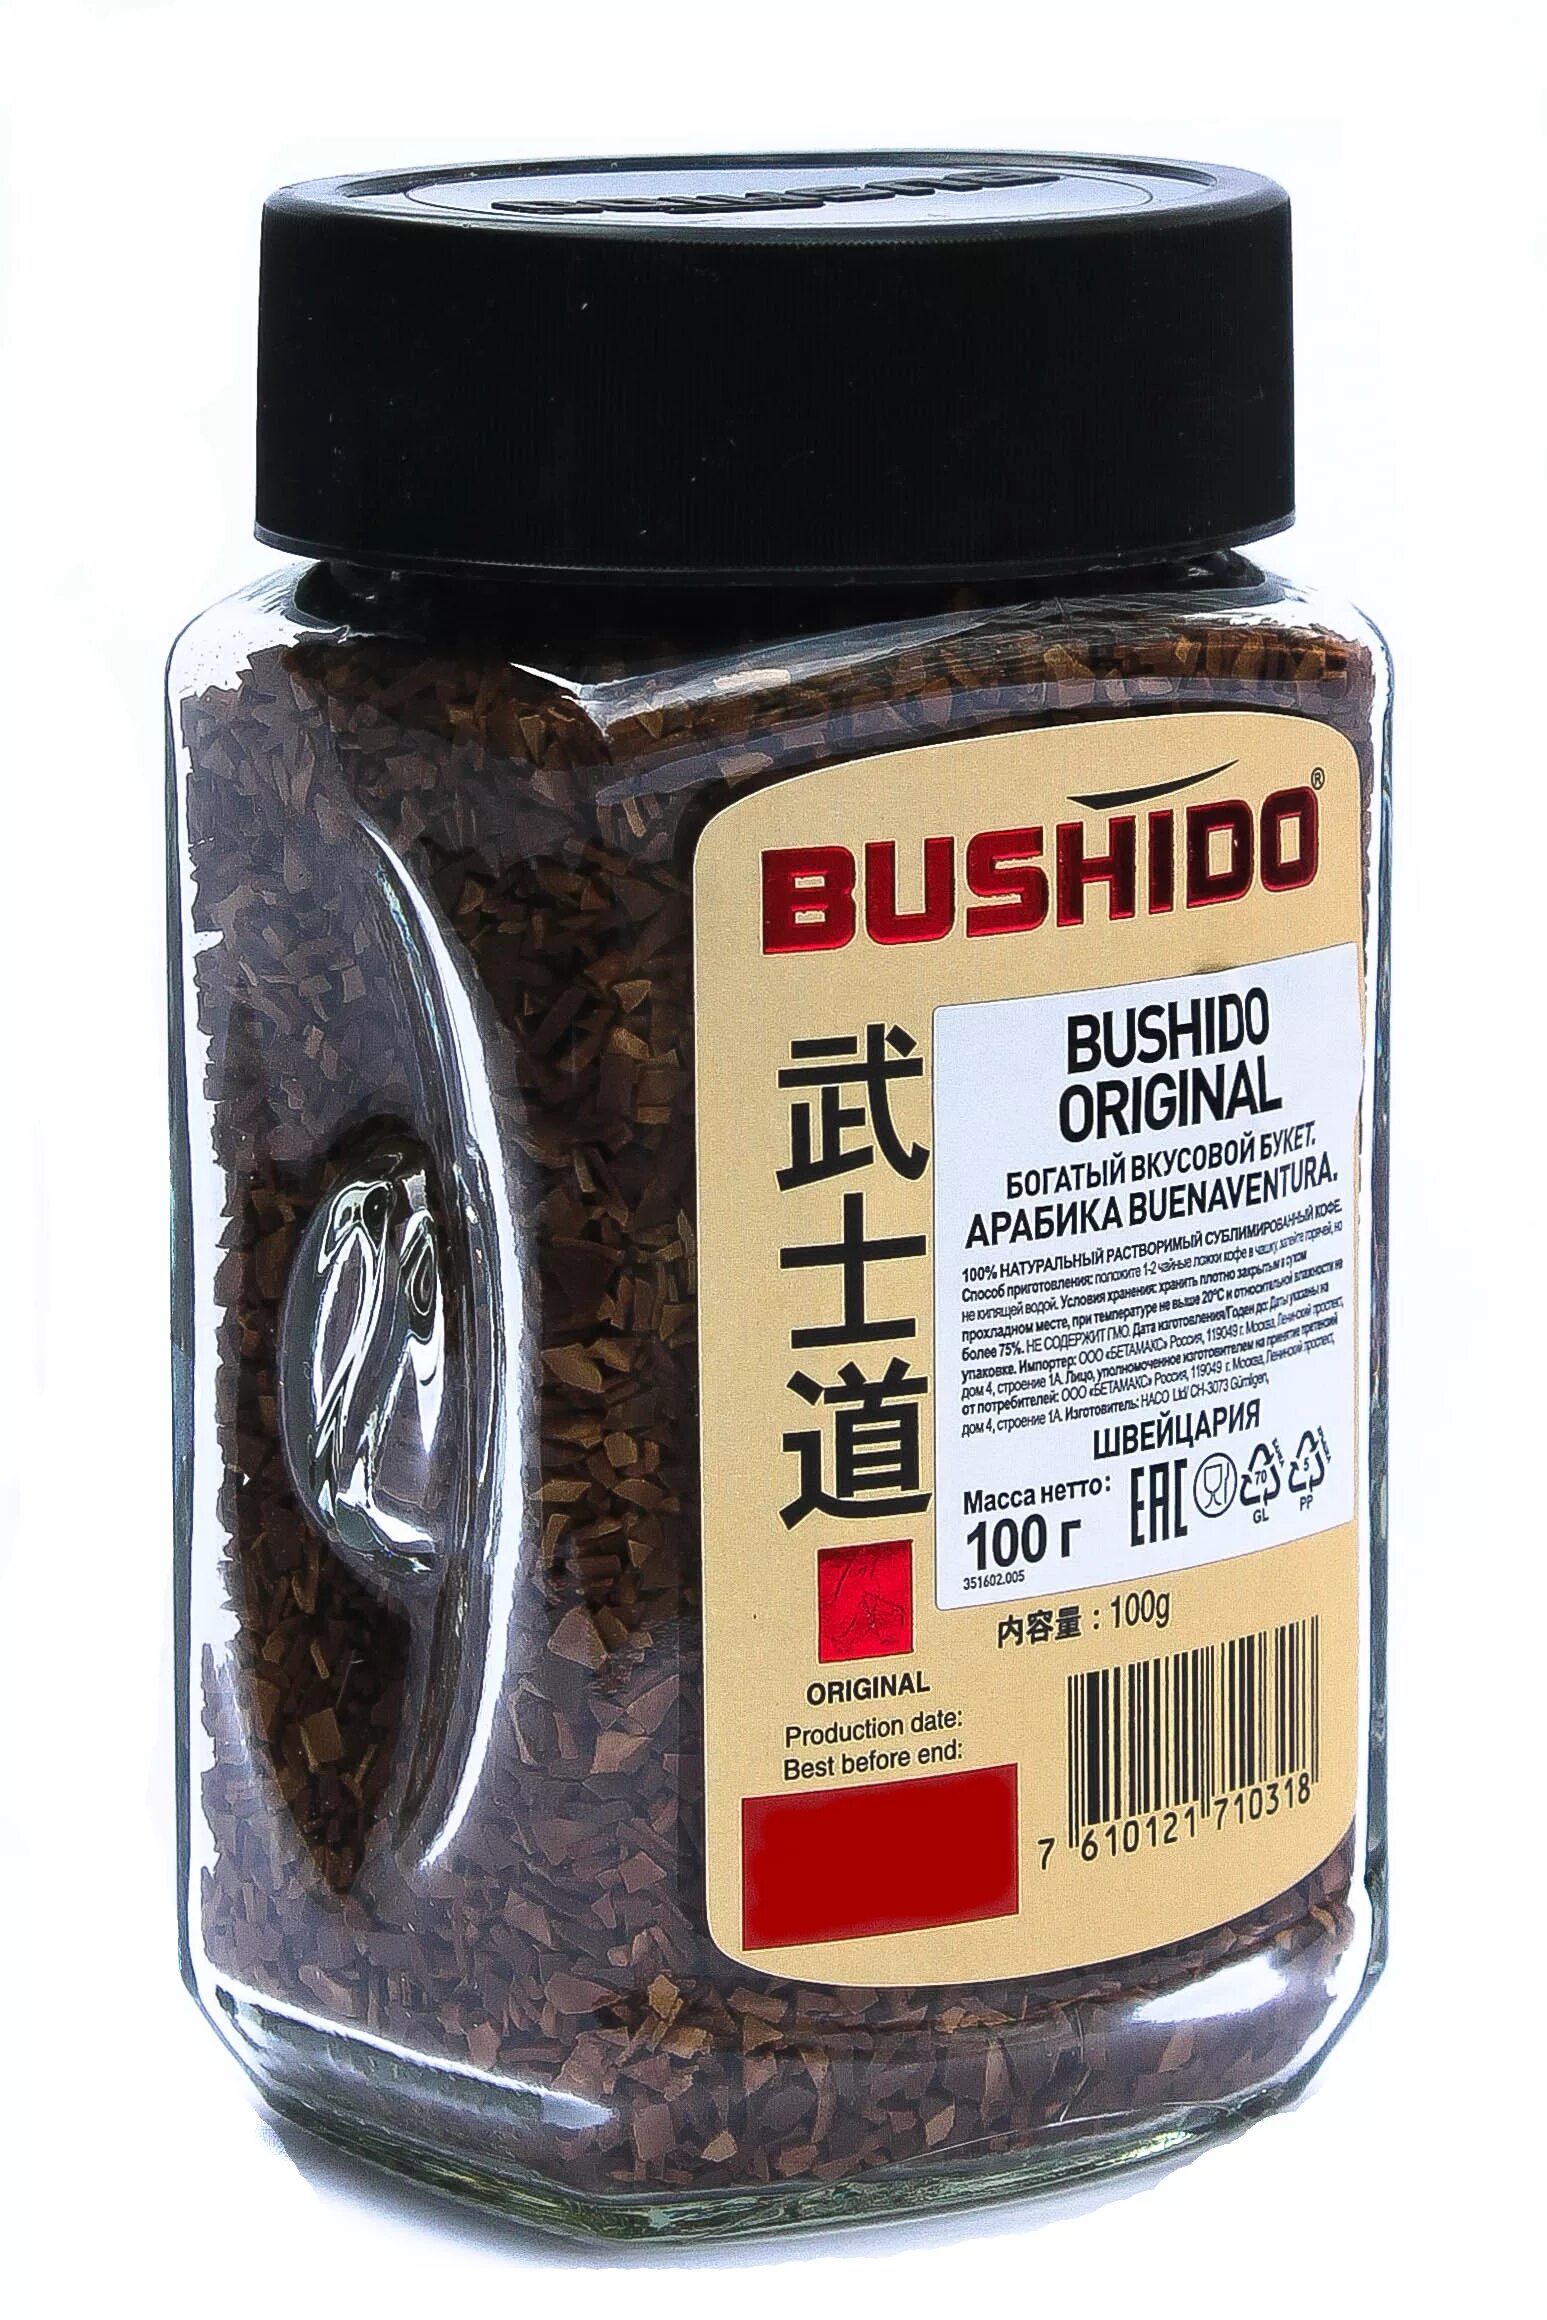 Bushido кофе. Кофе Бушидо оригинал 100гр. Бушидо кофе 100г. Кофе Бушидо растворимый 100г. Кофе "Bushido" оригинал 100г.